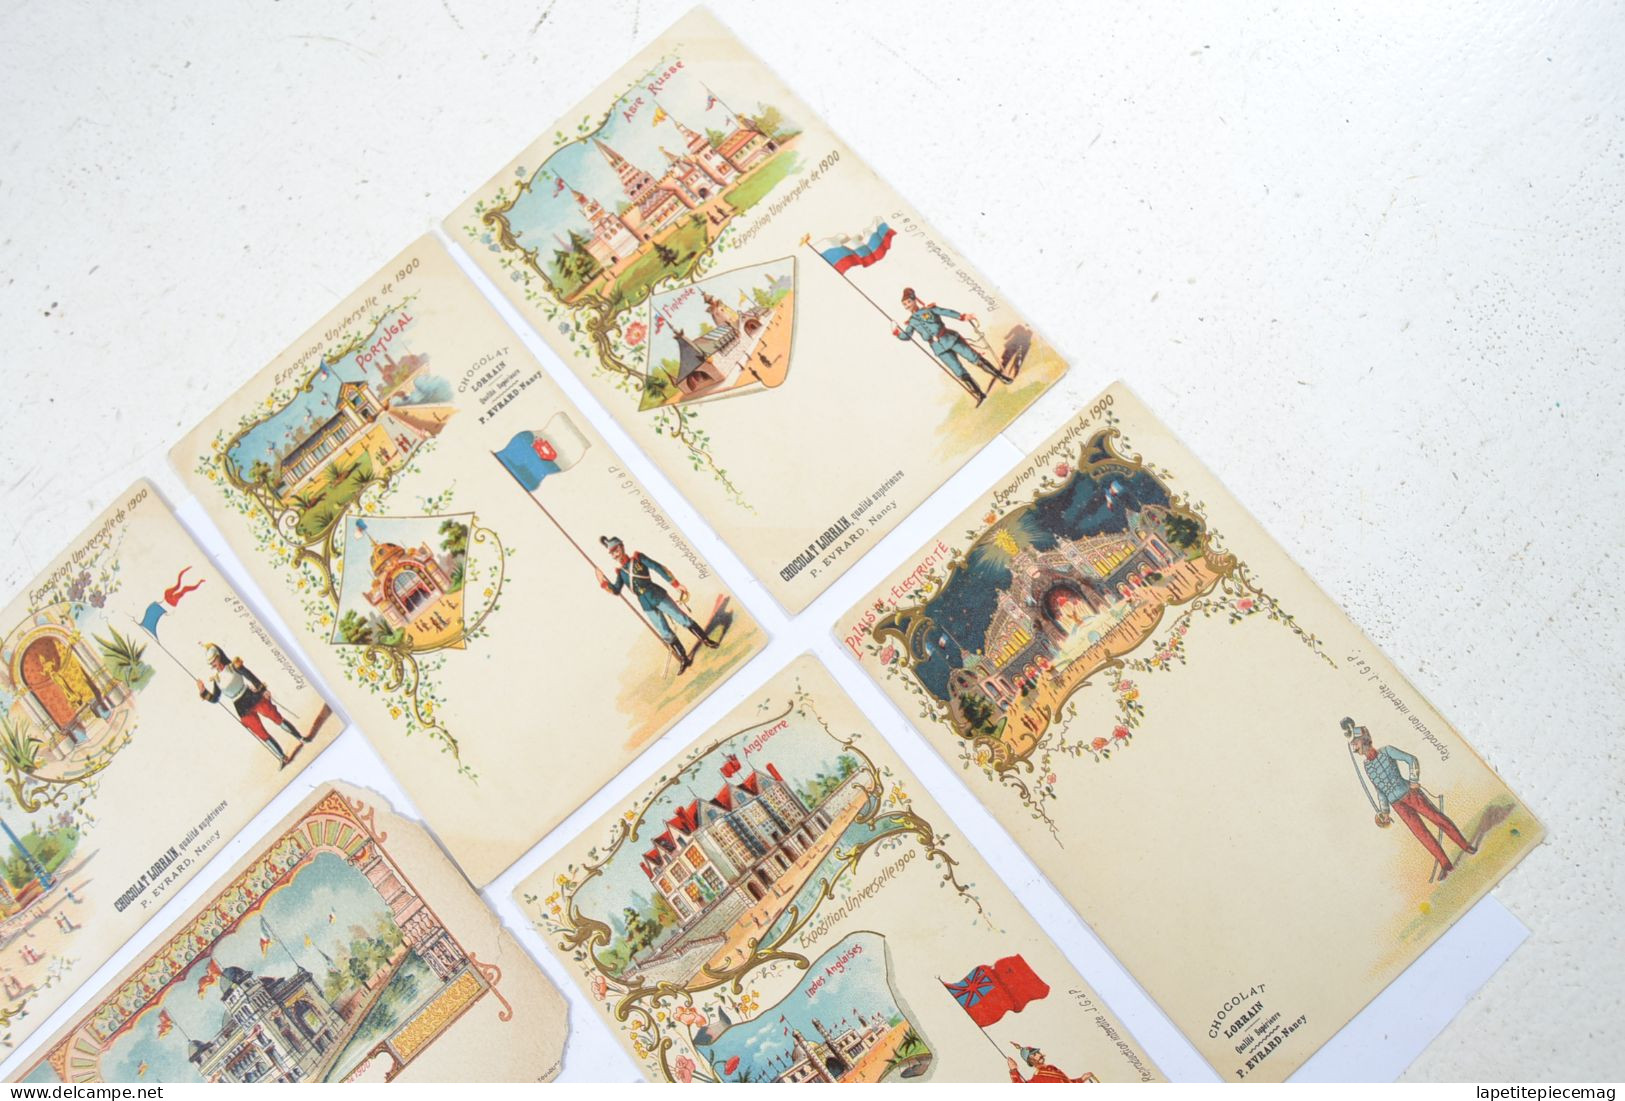 (AD24A) CPA lot cartes postales chocolat Lorrain P. Evrard Nancy, exposition universelle de 1900. Collection